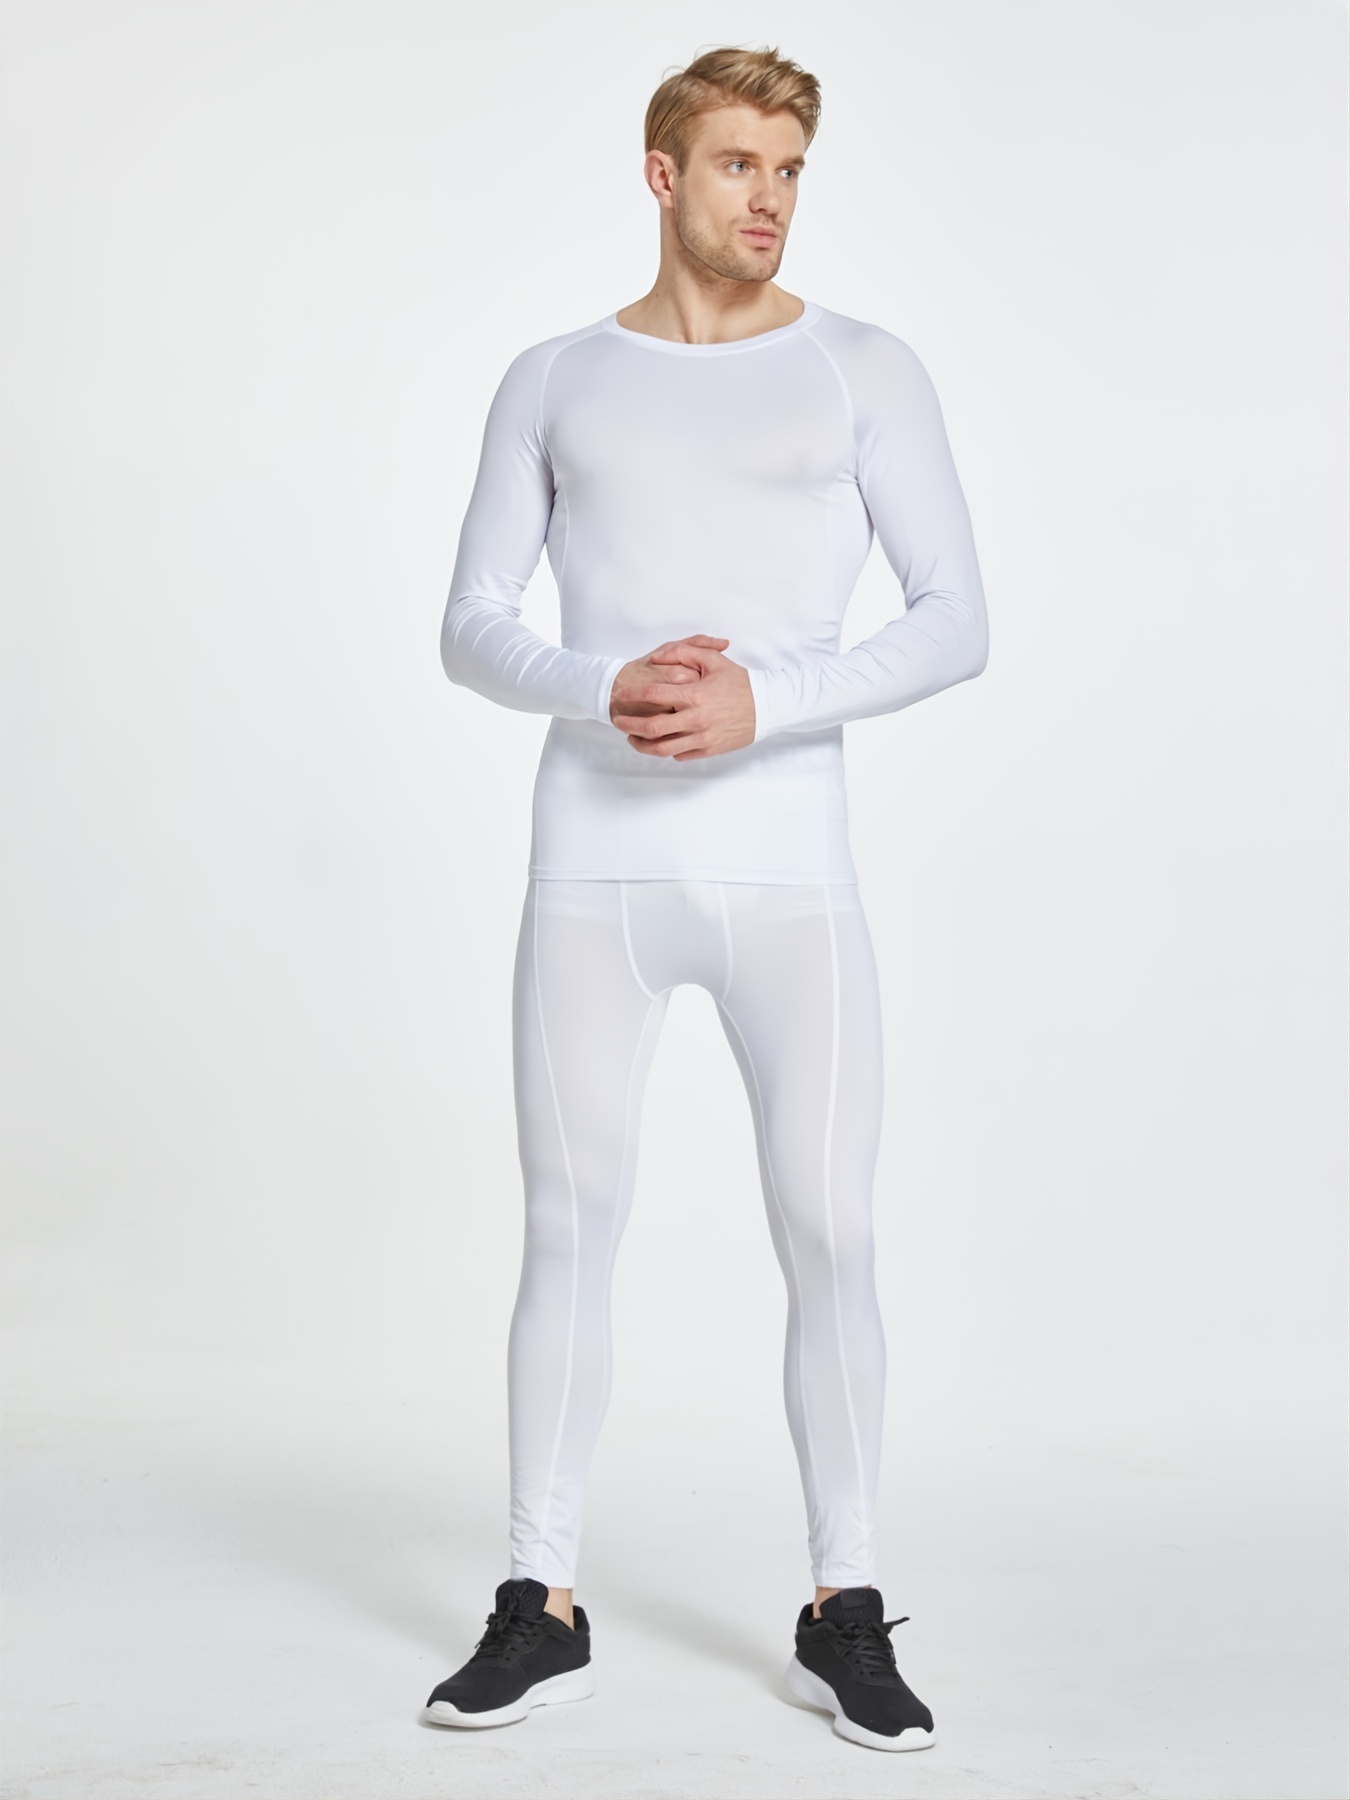 KGPopular Men's Stretchy Compression Yoga Pants Baselayer Cool Dry Sports  Leggings Bottoms 